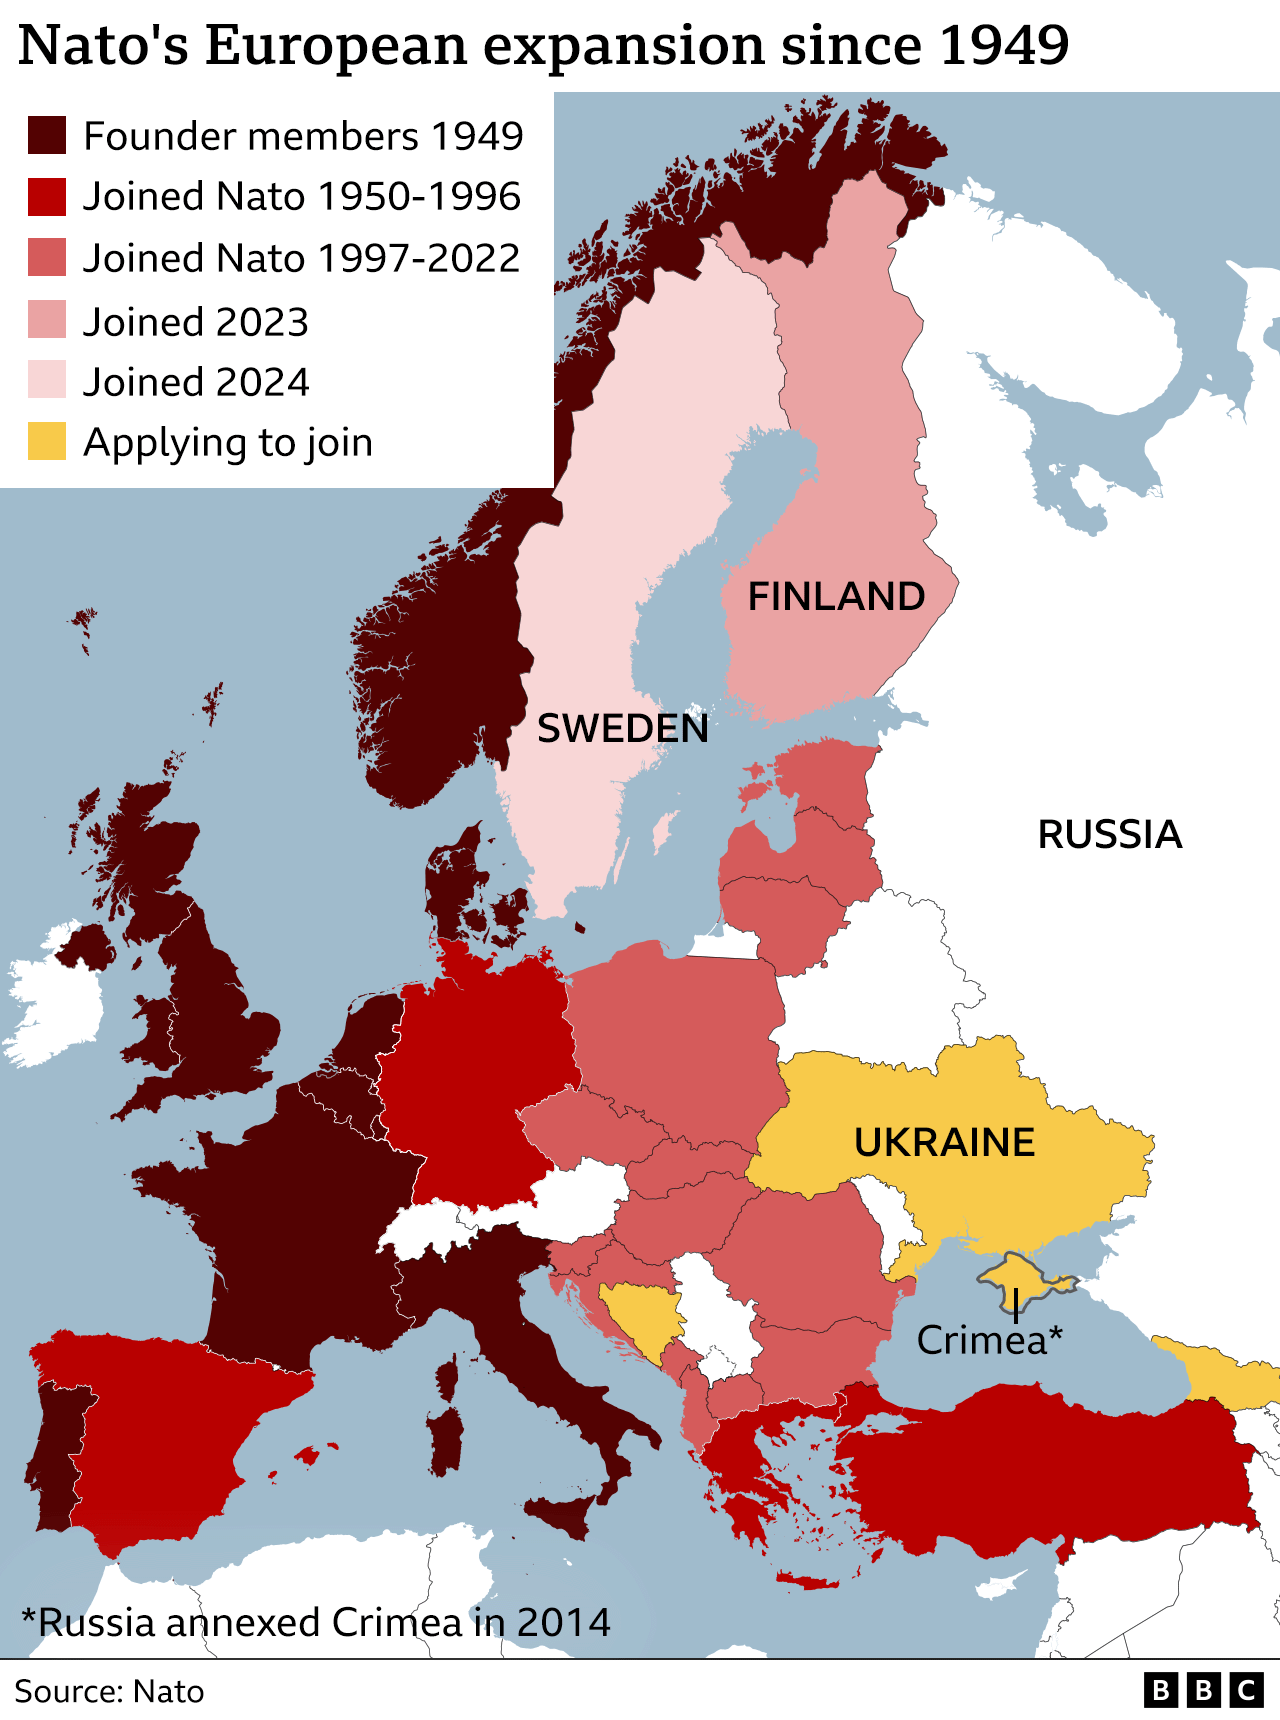  132886041 Nato's European Expansion Since 1949 640 2x Nc 